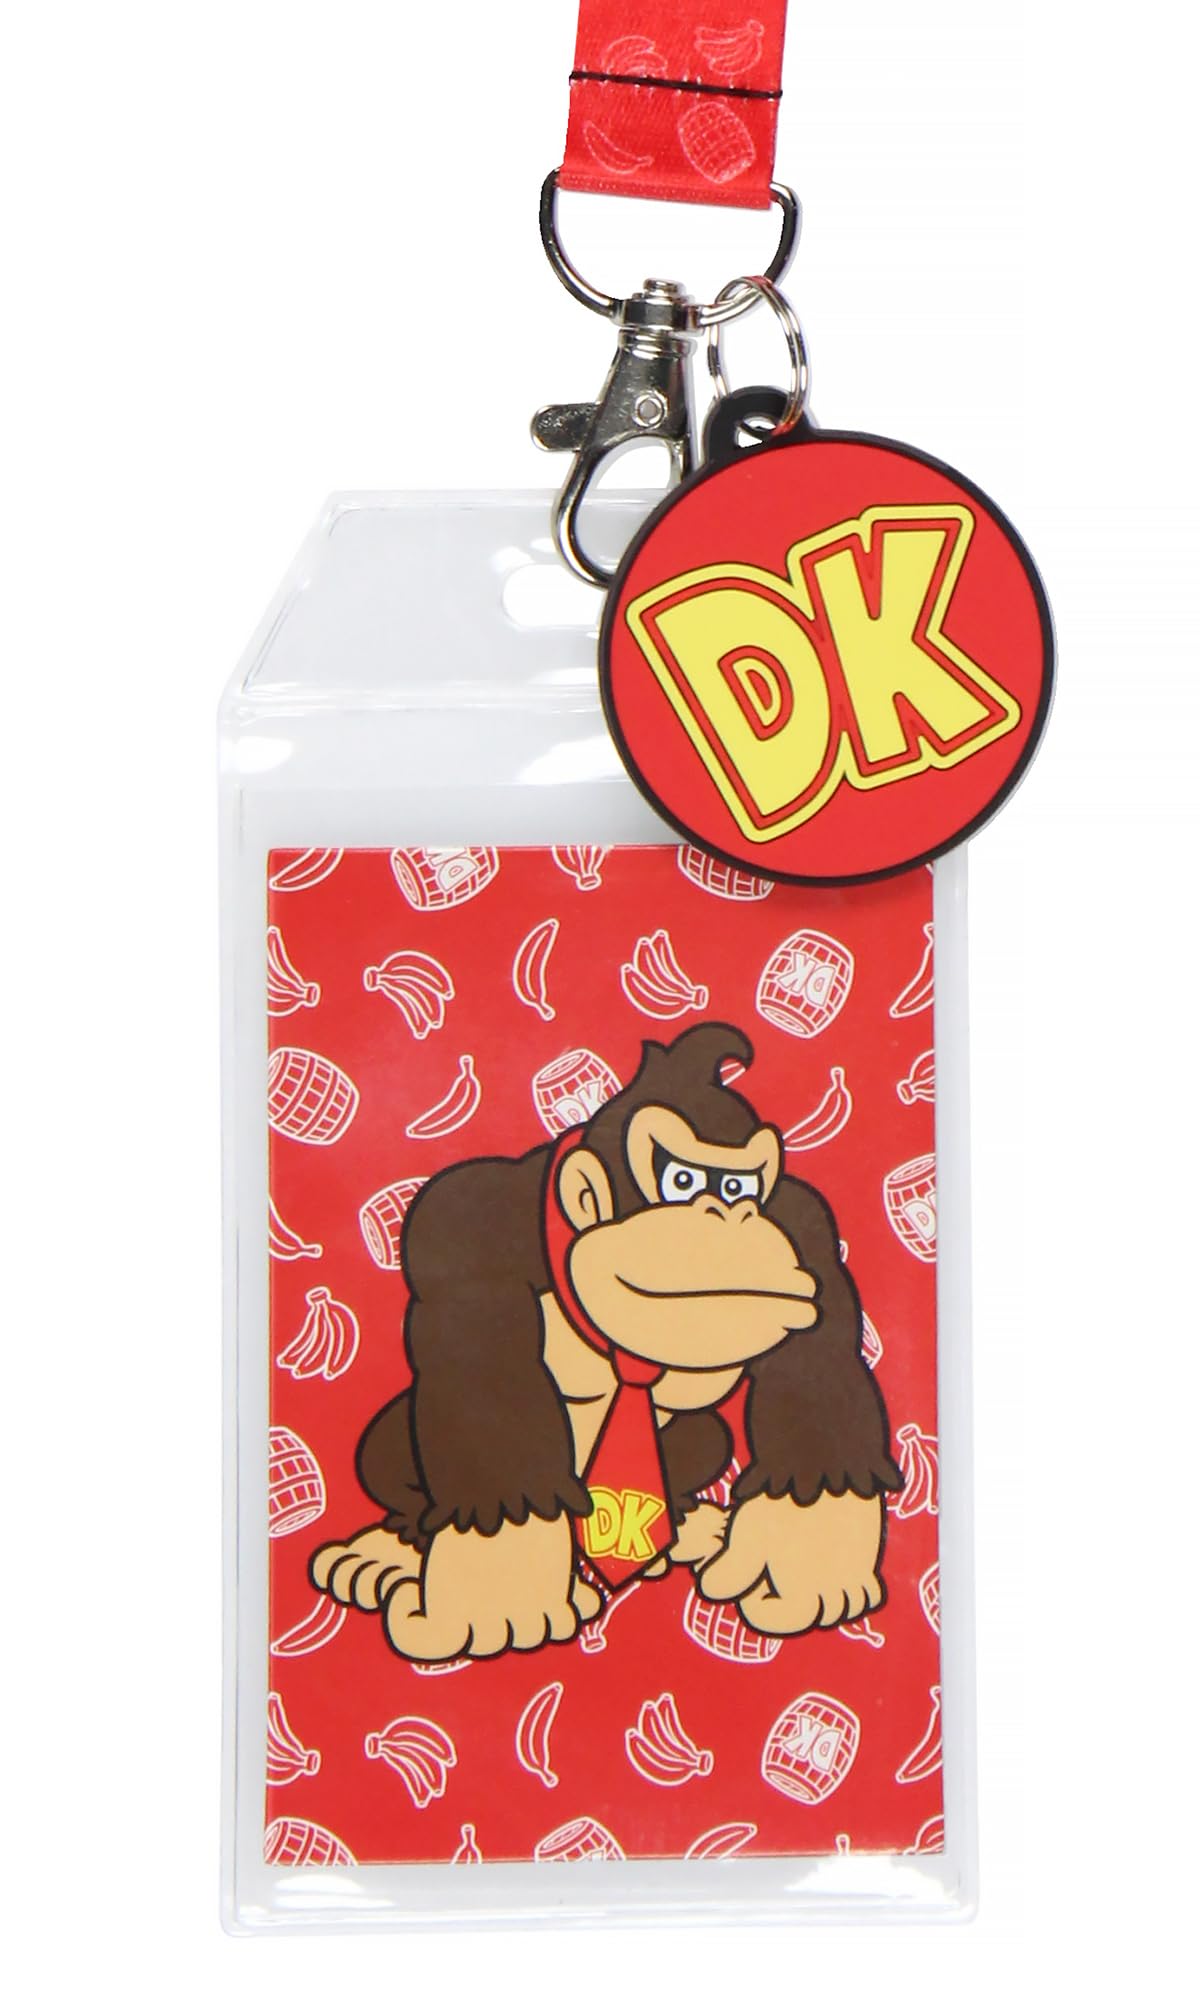 Nintendo Super Mario Donkey Kong Lanyard ID Badge Holder Lanyard w/Rubber Charm Pendant